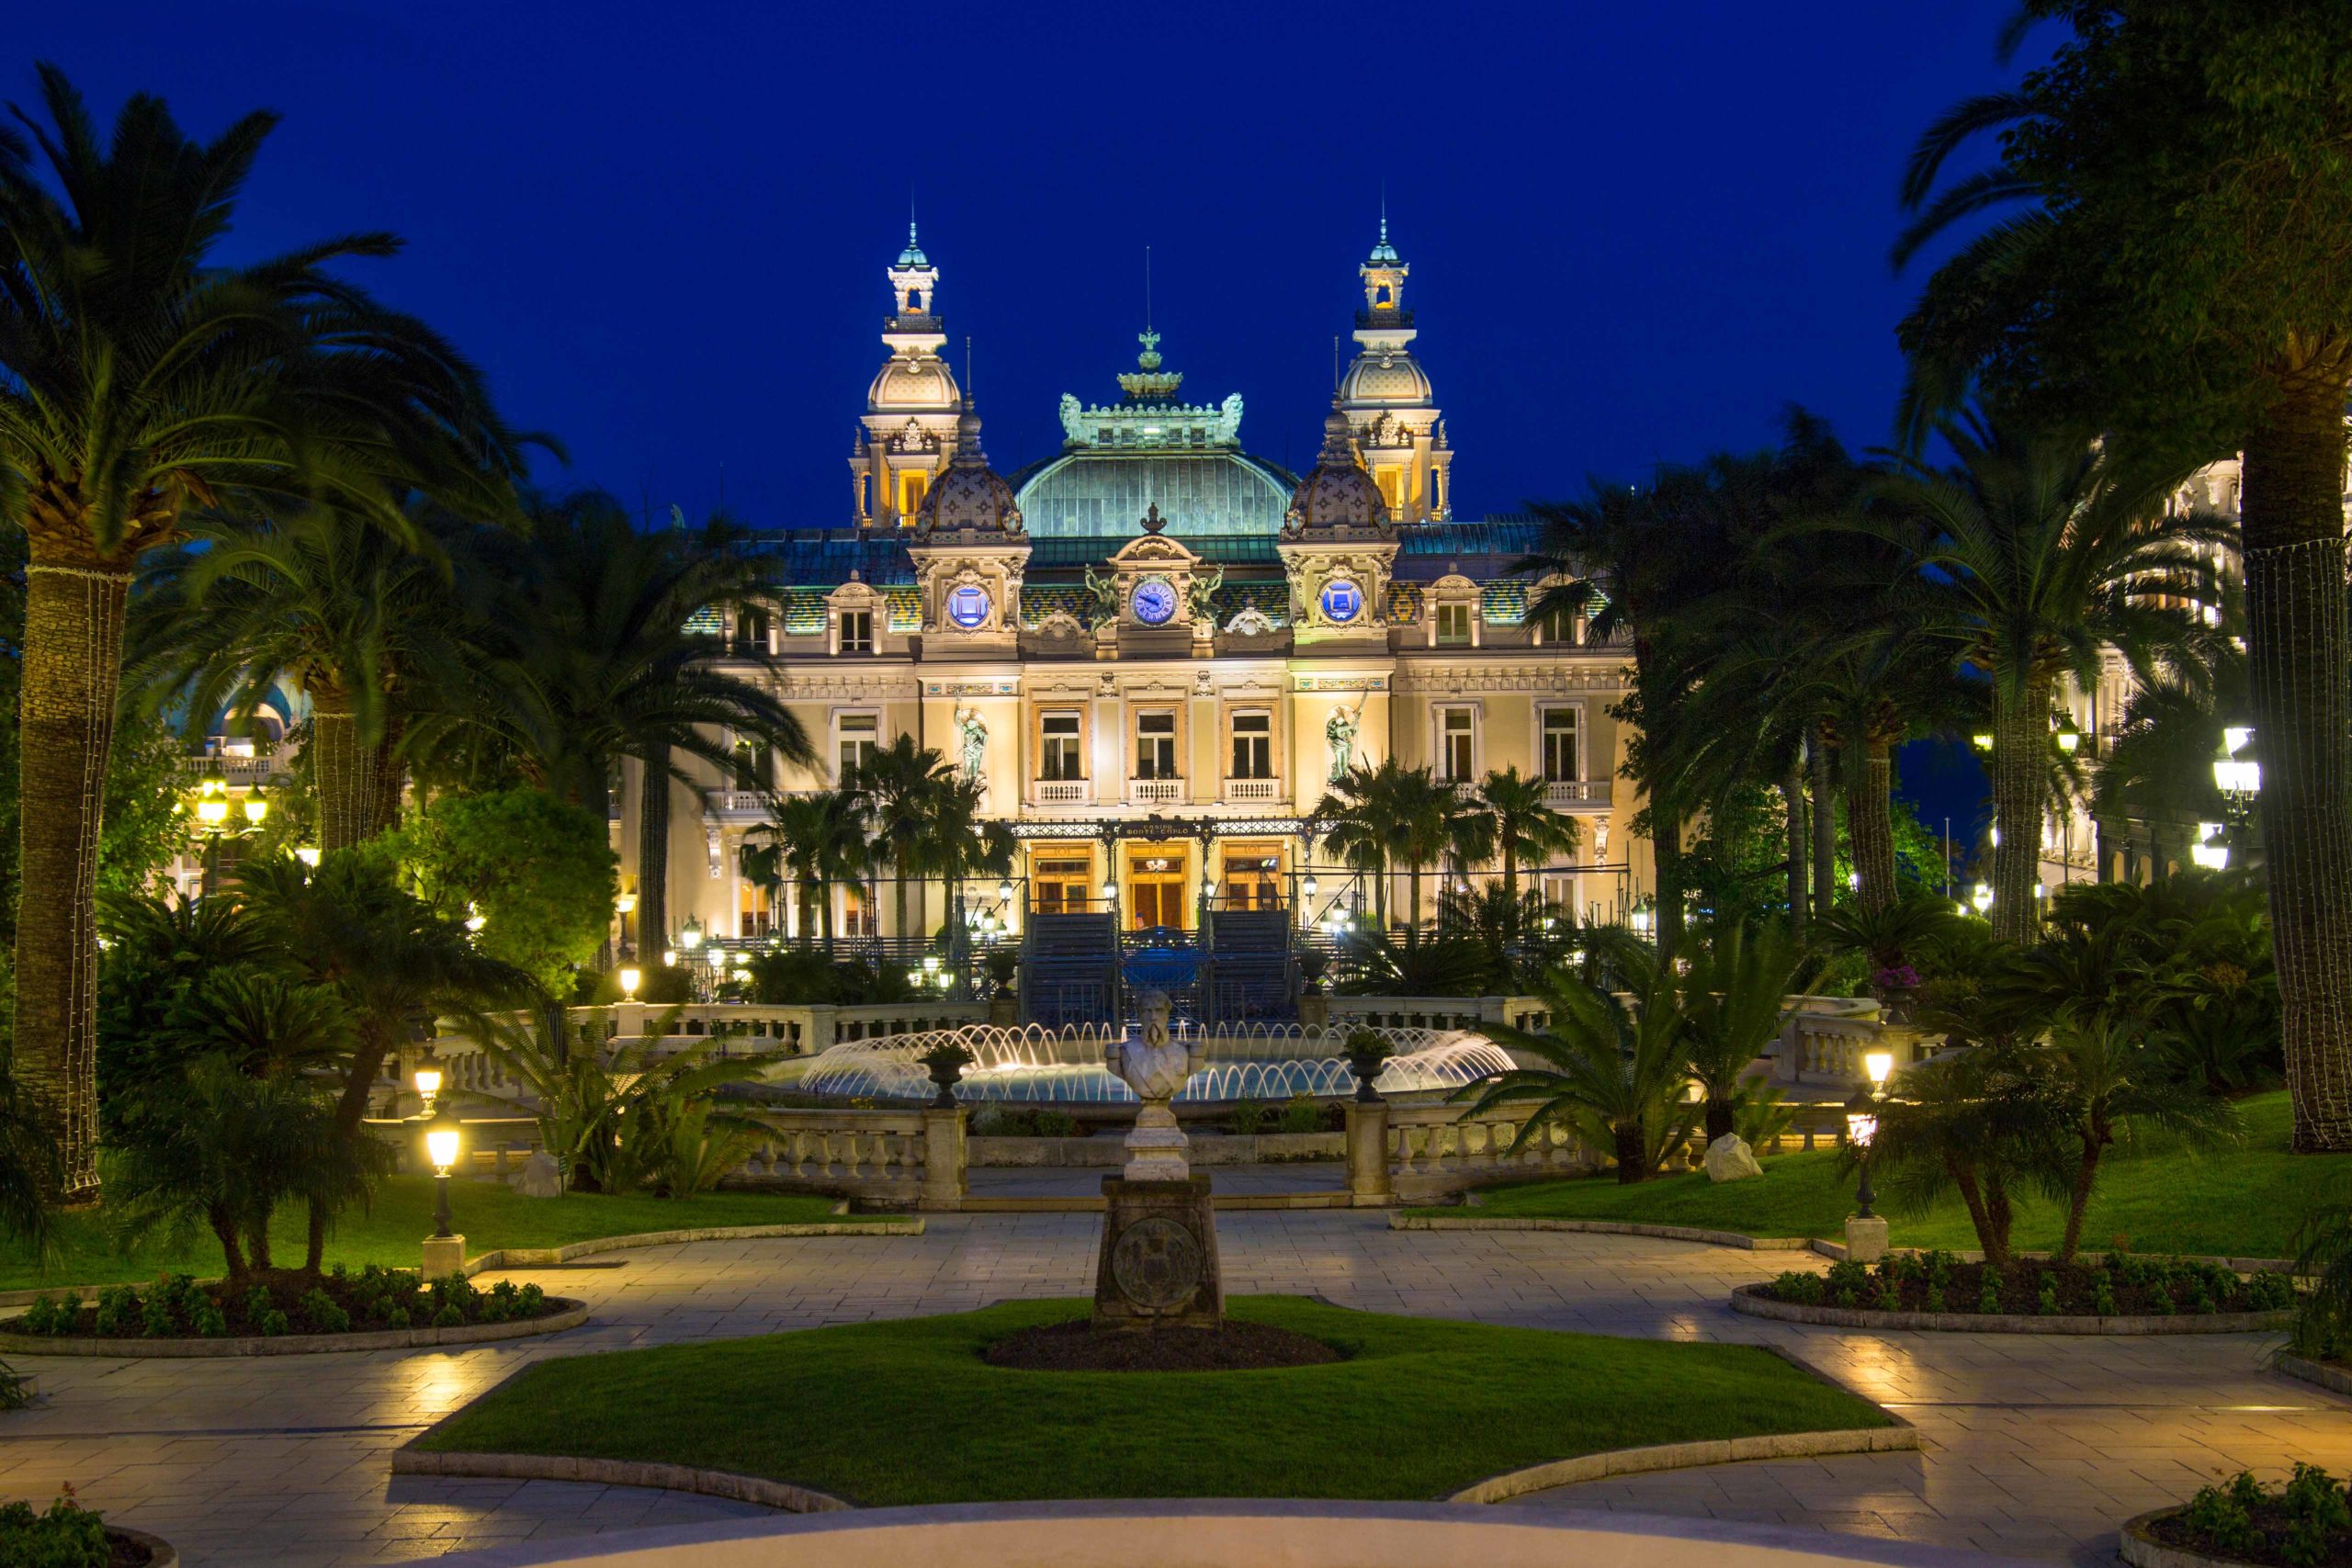 Vue nocturne du Casino de Monte-Carlo. Photo : @SteveAllenPhoto via Twenty20